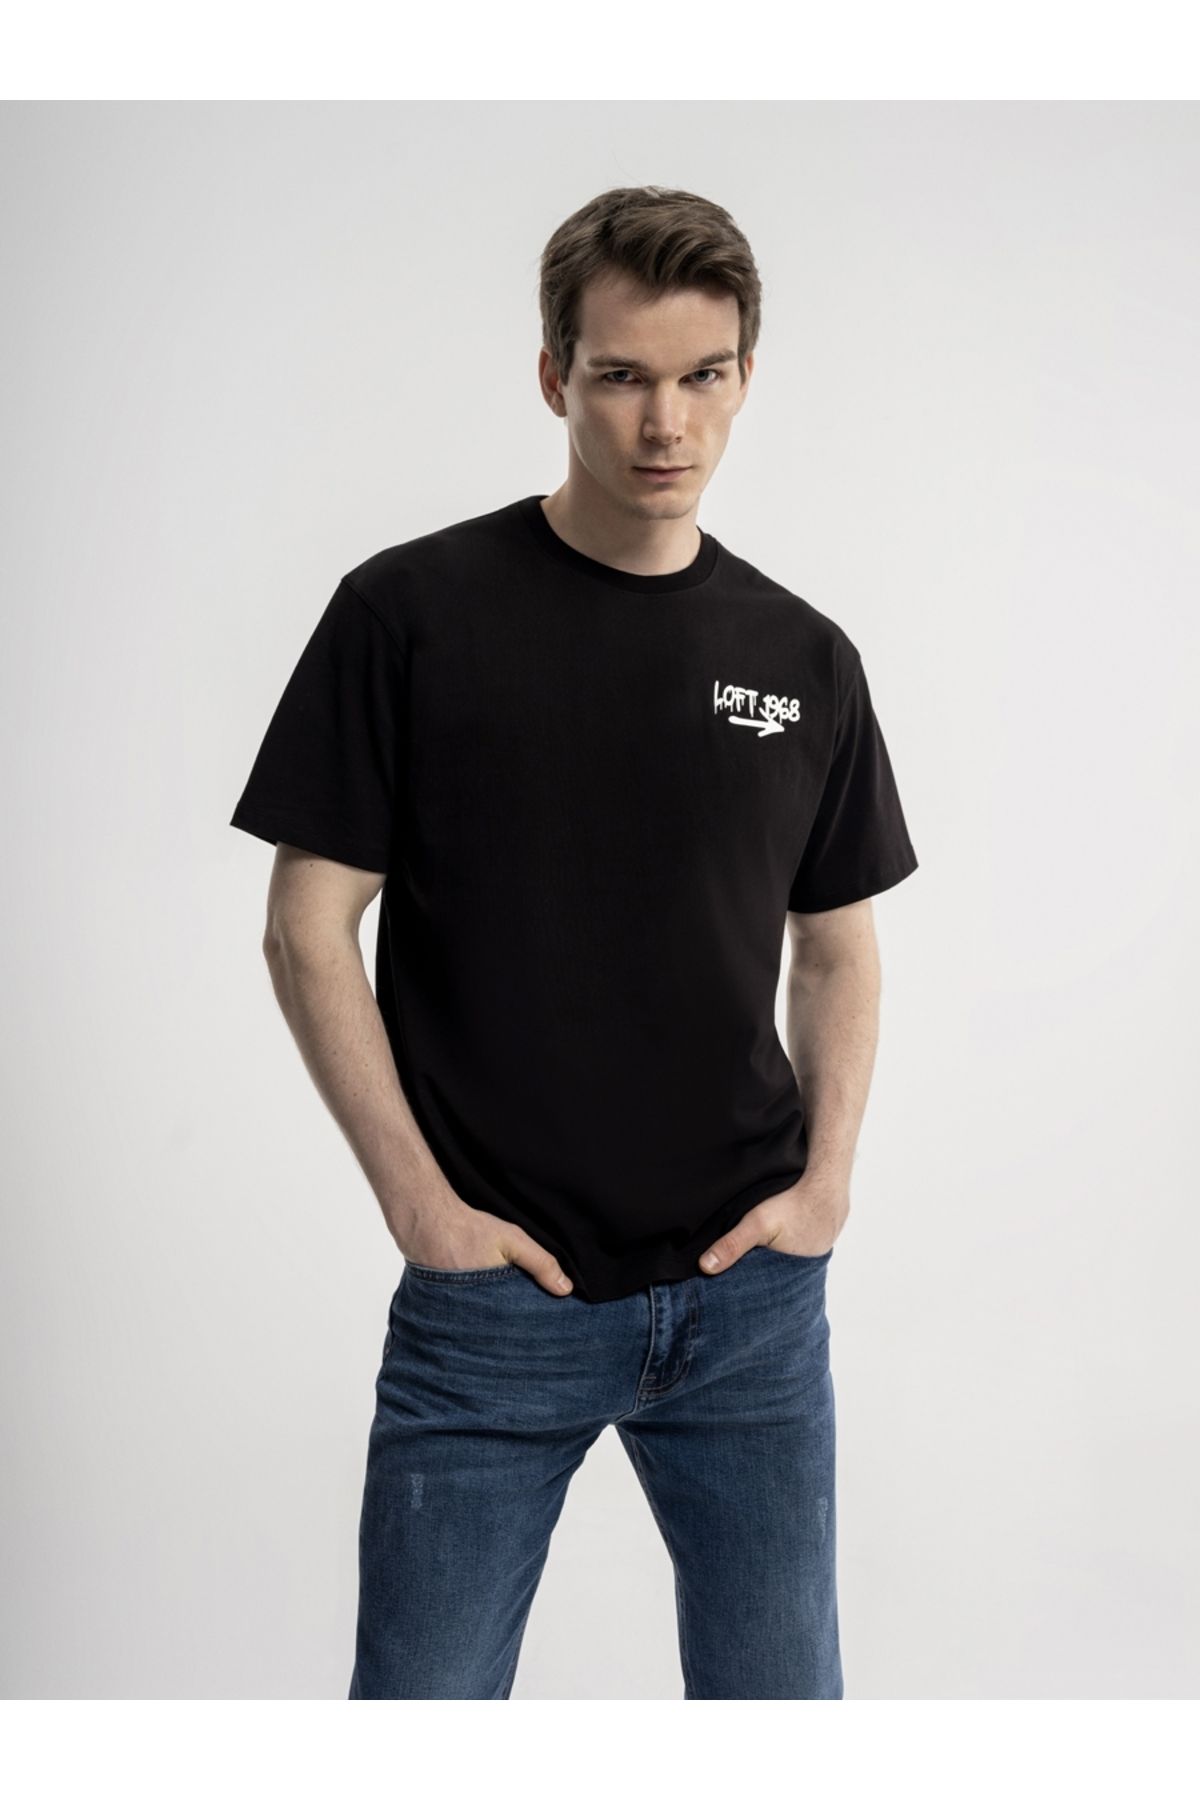 Loft تی شرت مردان LF2035159 سیاه